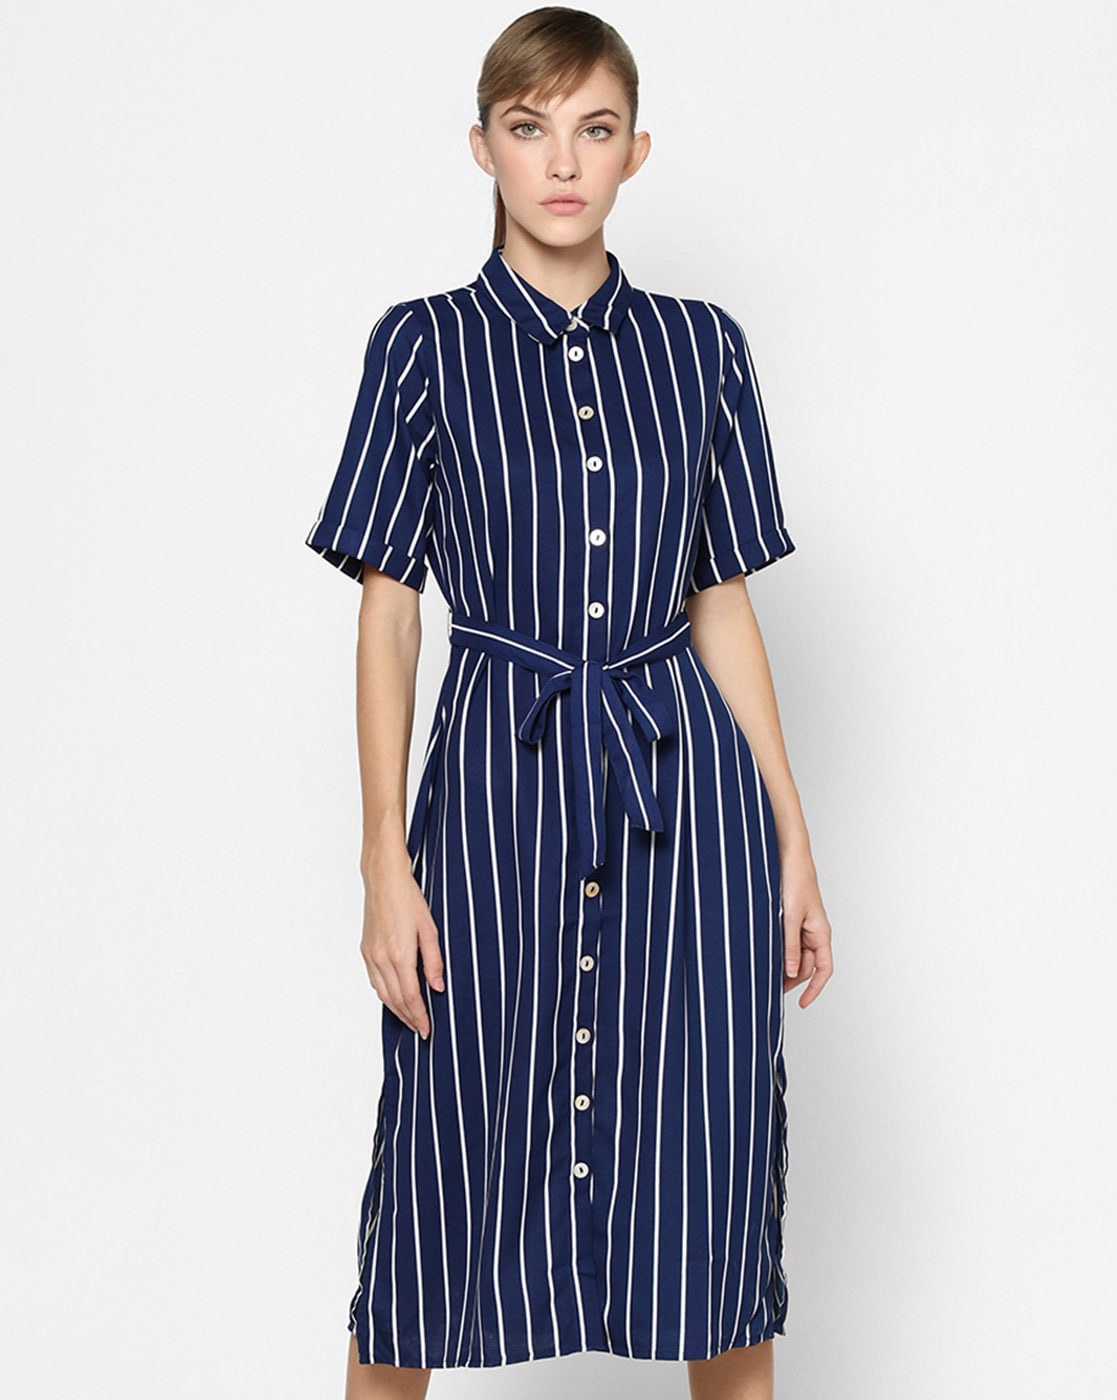 Geometric Print Shirt Dress with Tie-Up